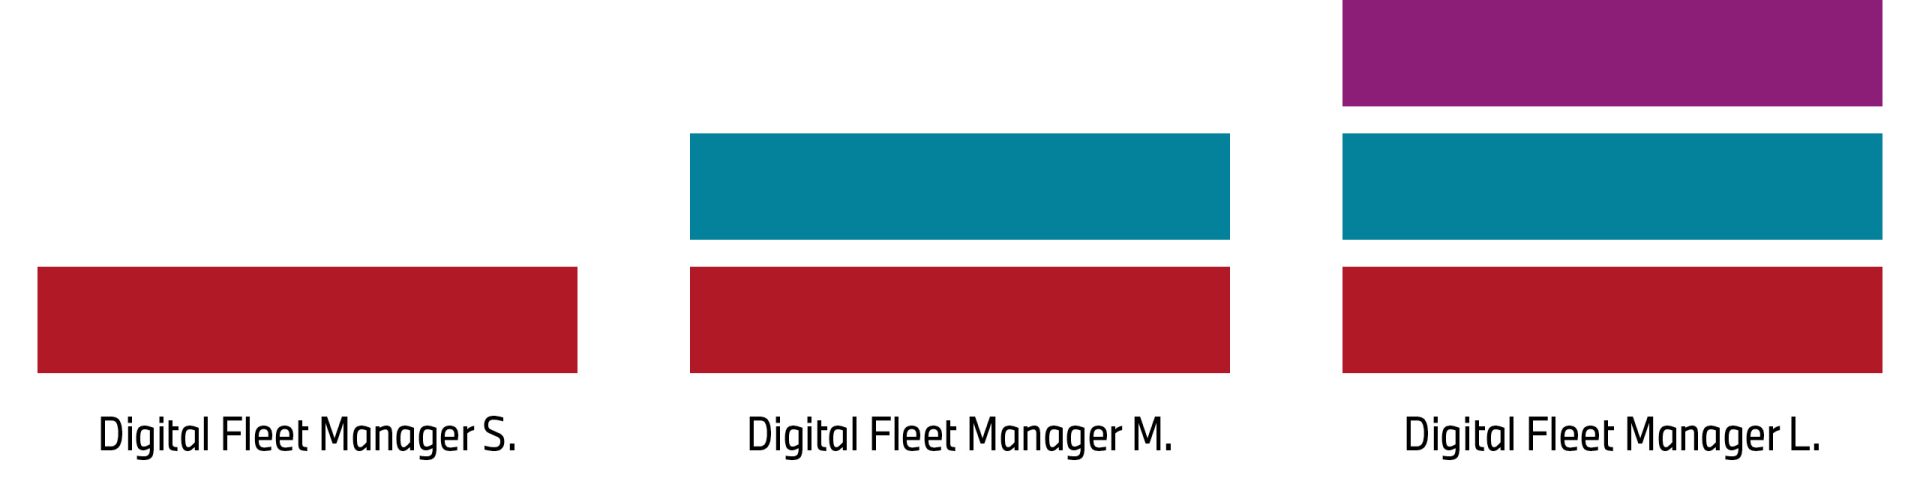 Visualization of parcel volumes from Digital Fleet Solutions.